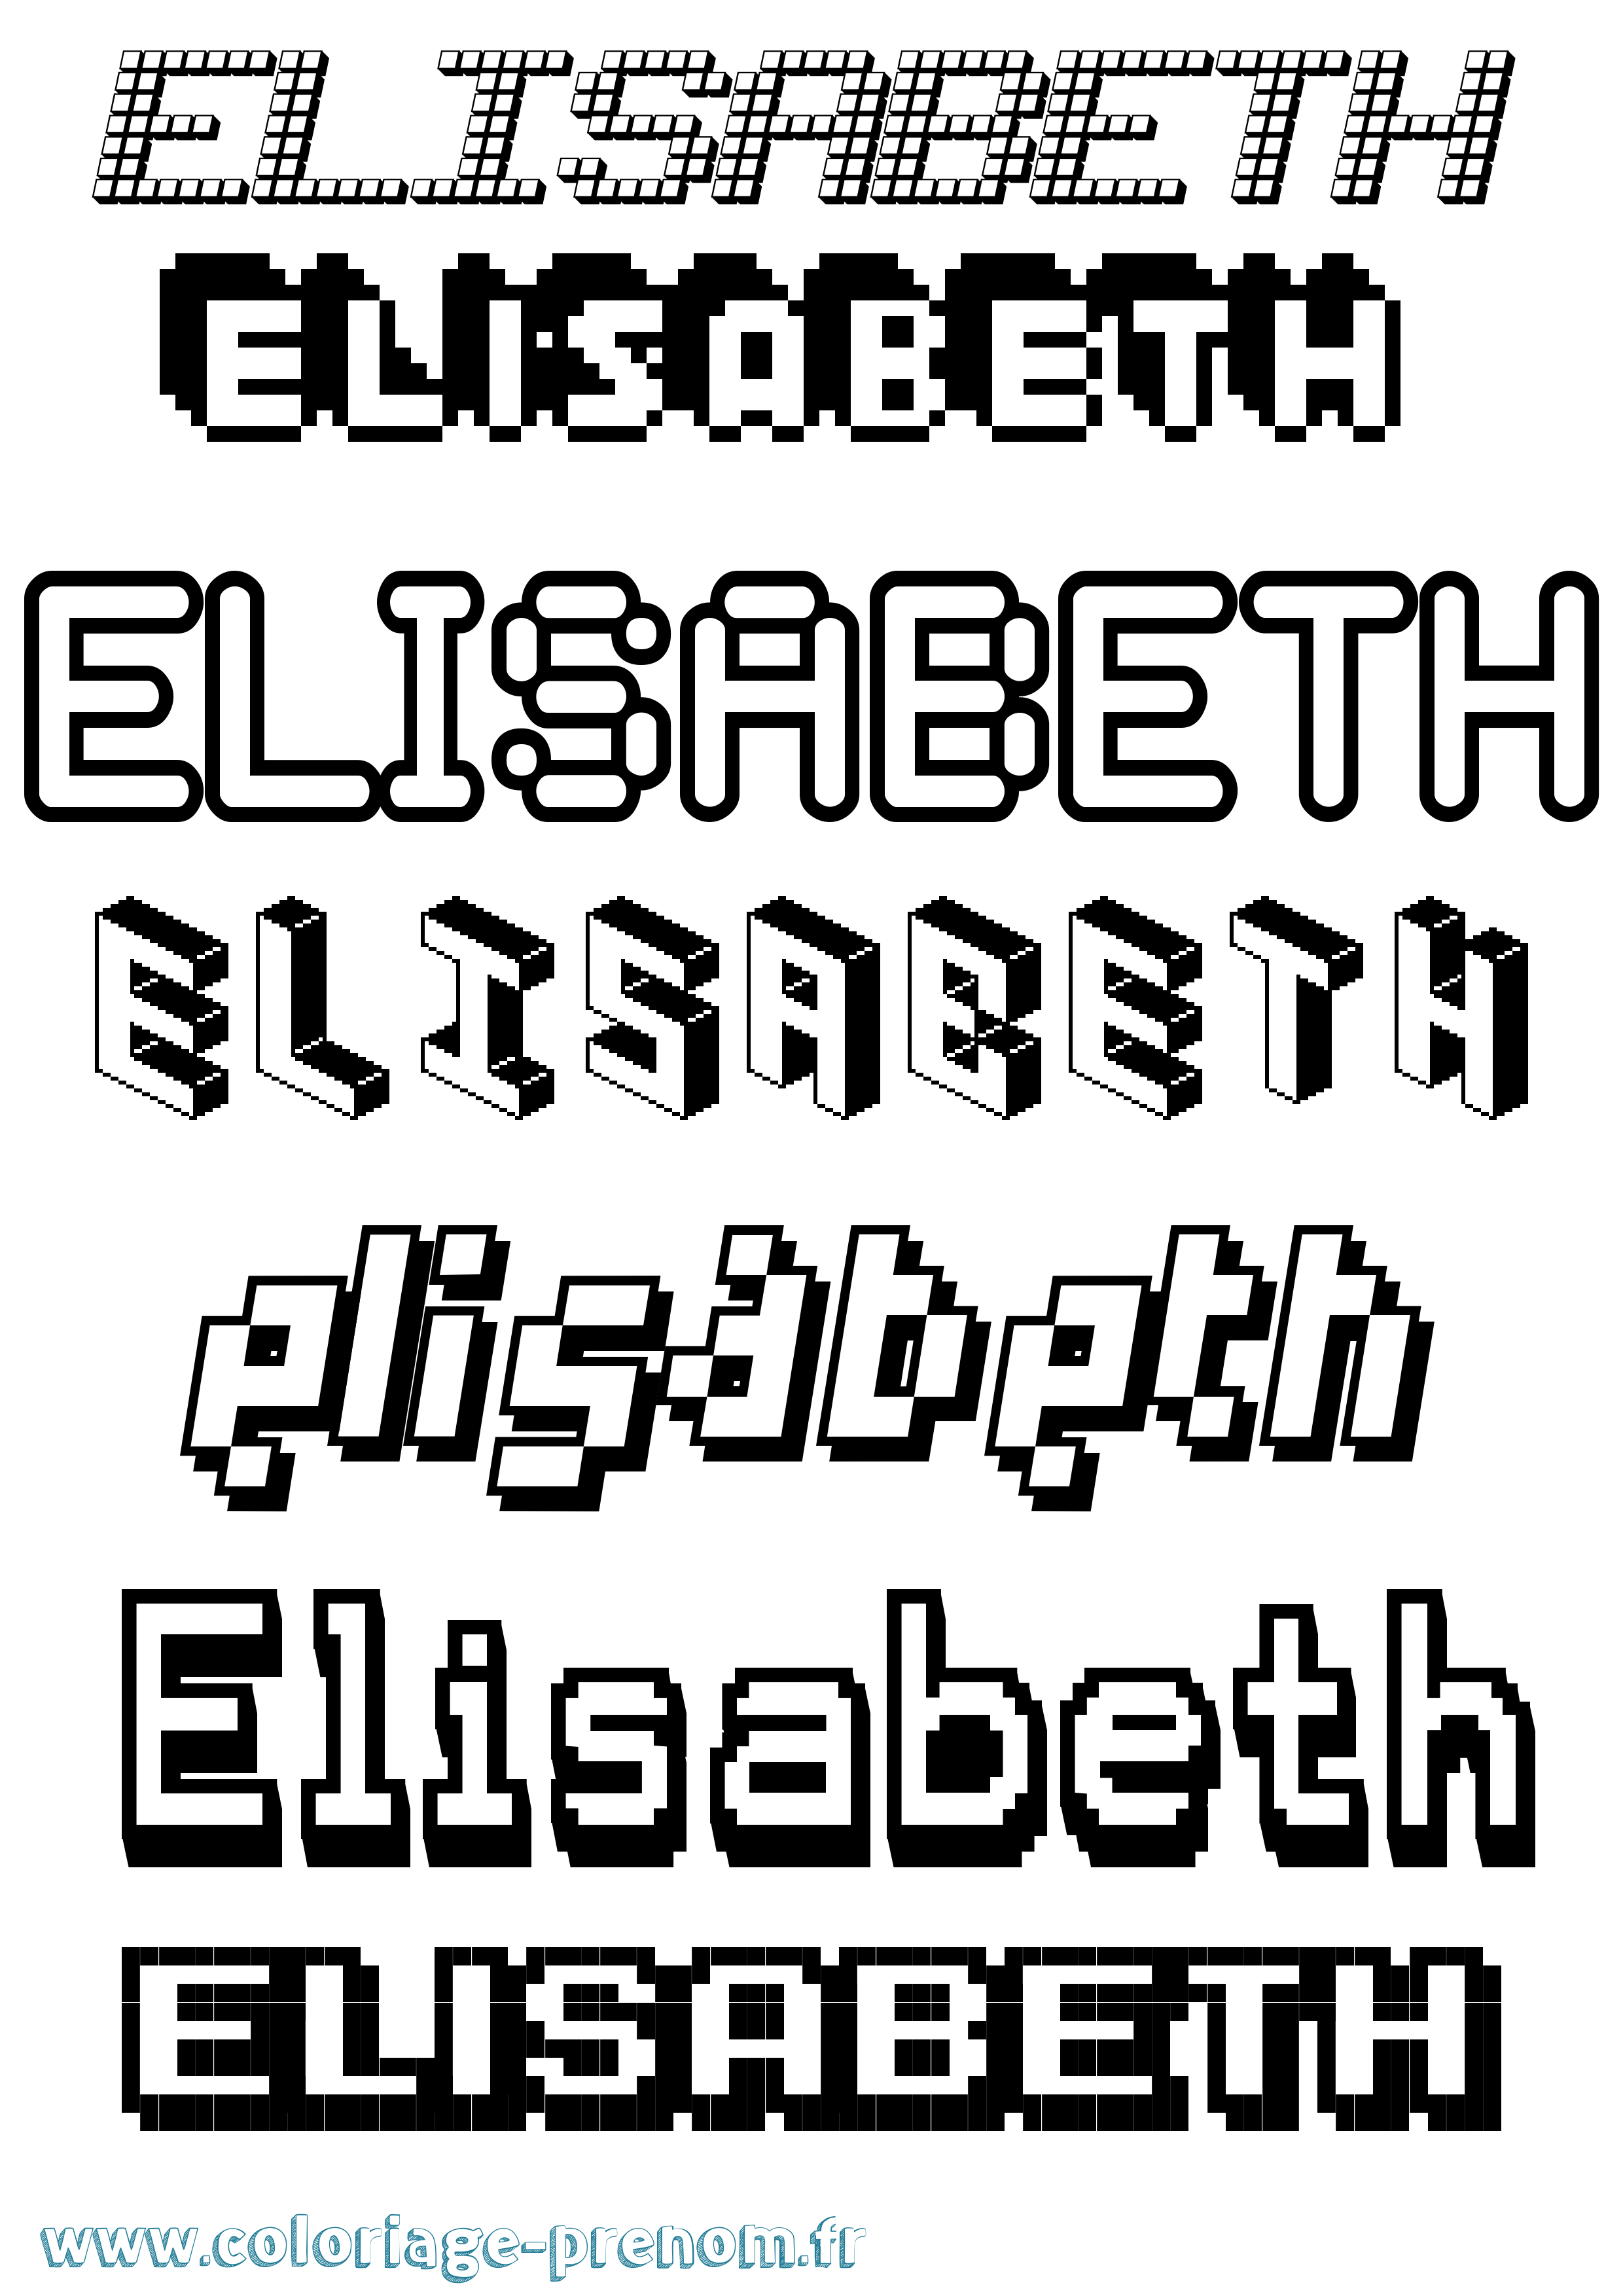 Coloriage prénom Elisabeth Pixel